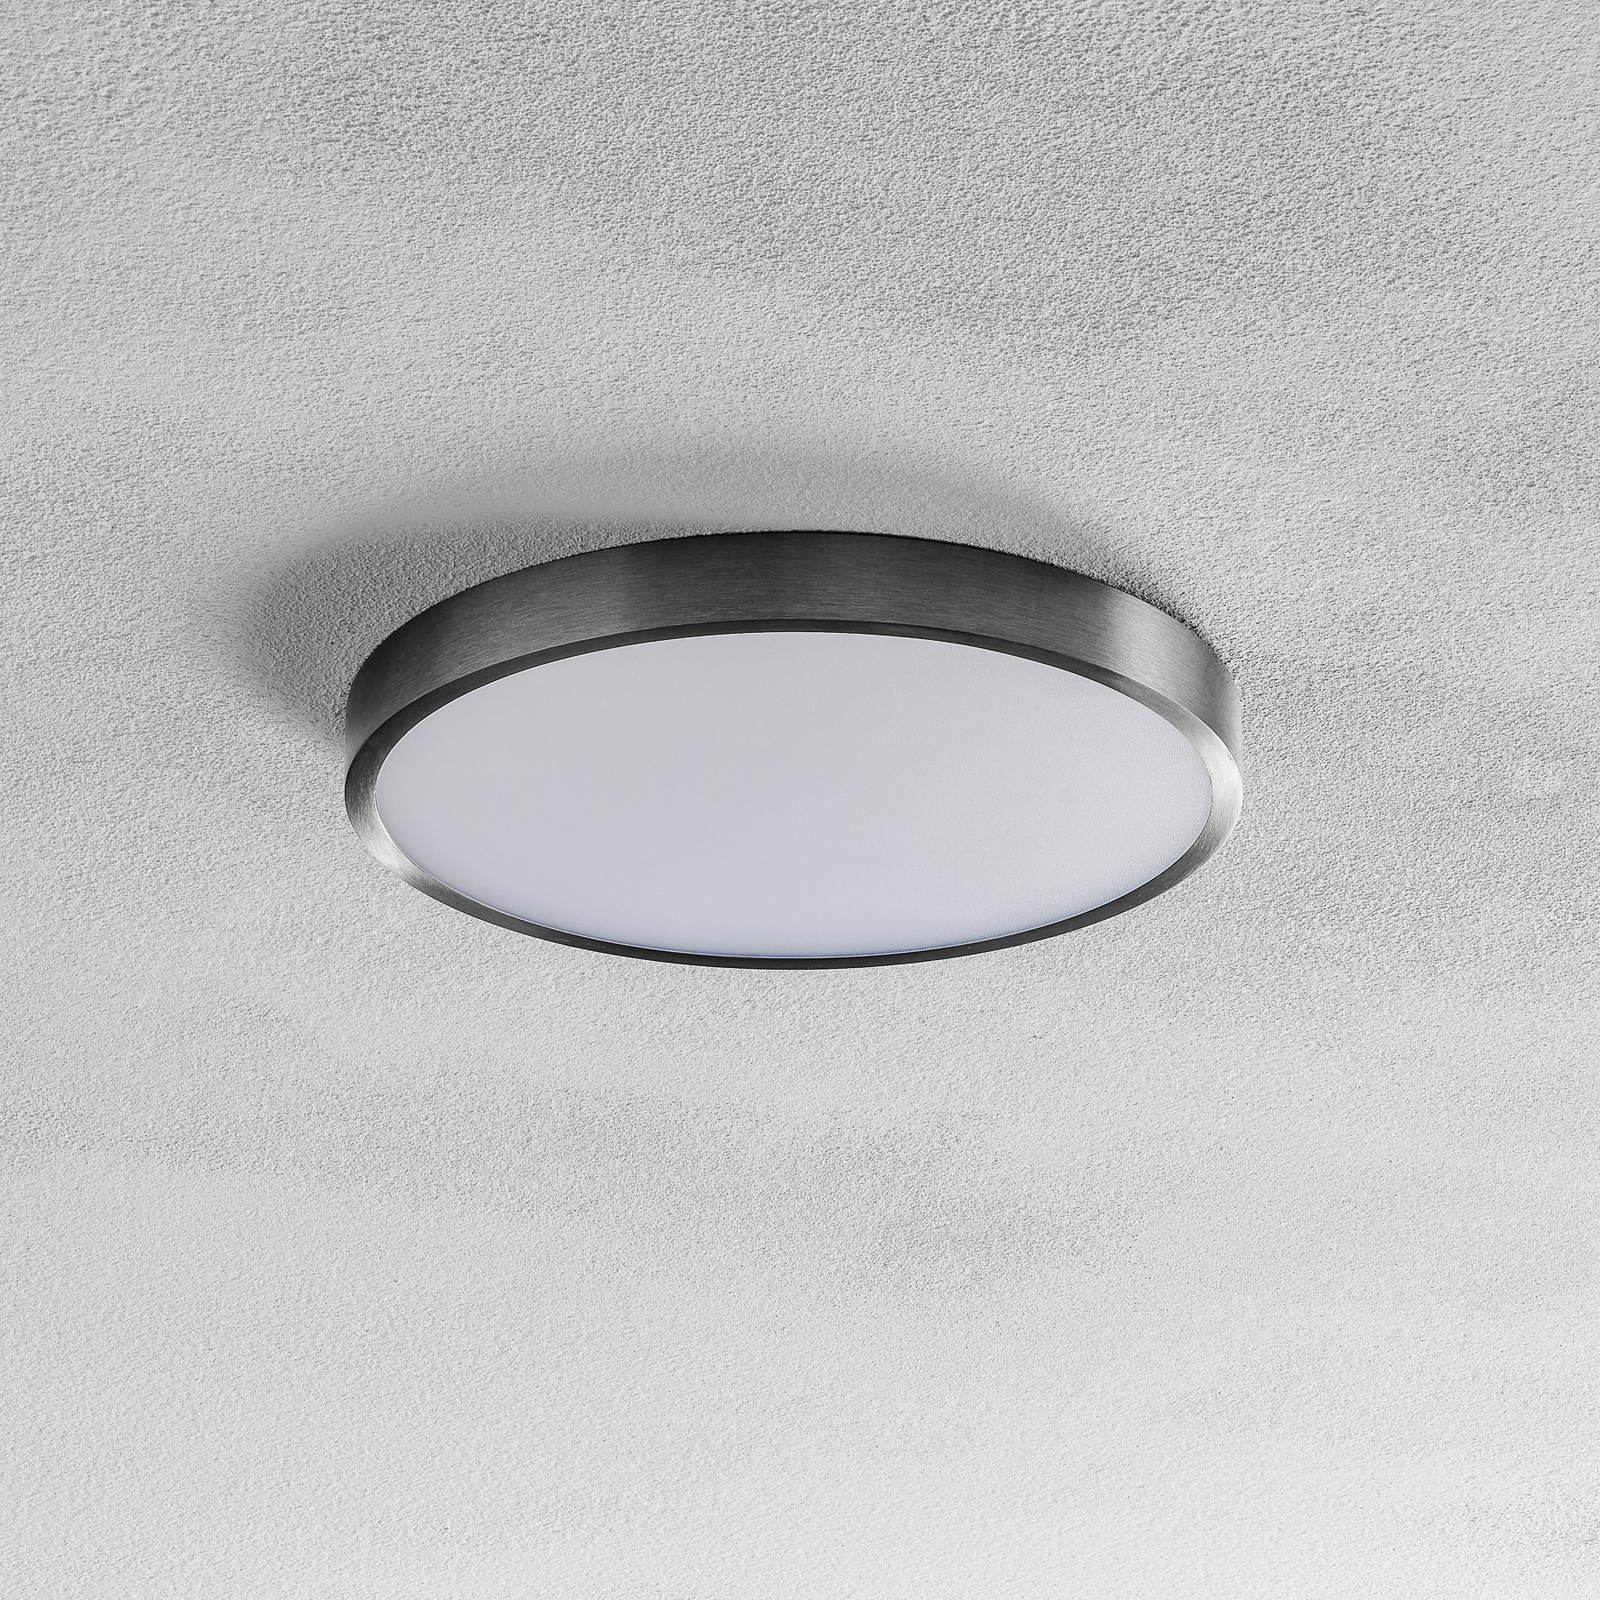 LED ceiling light Bully, matt nickel, Ø 24 cm